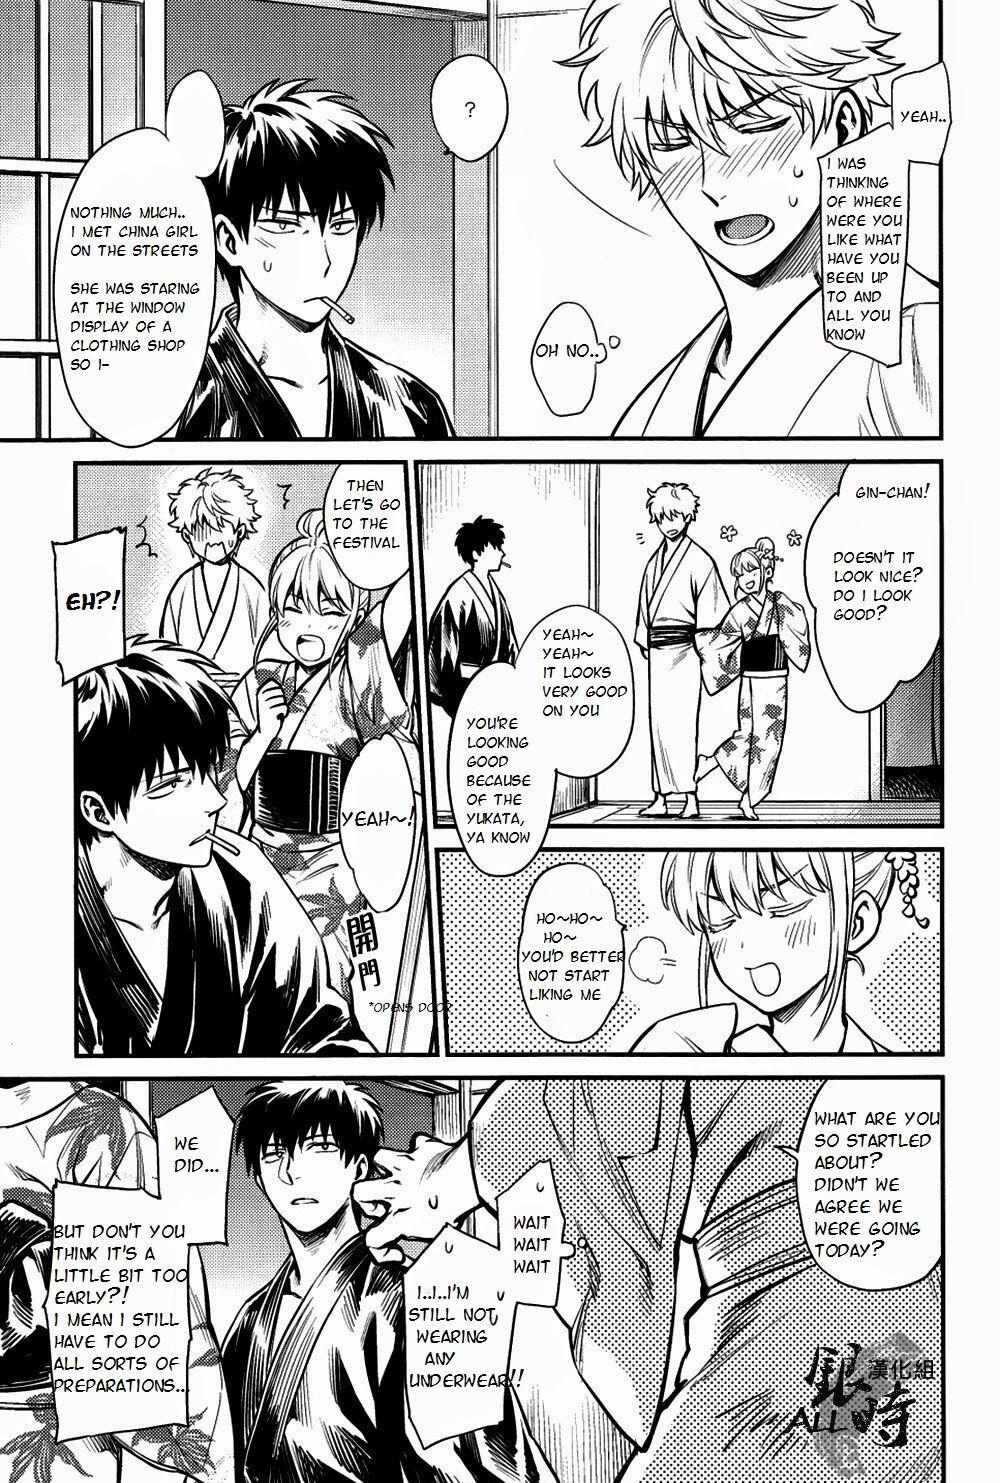 Groupsex Please! Gintoki - Gintama Student - Page 8